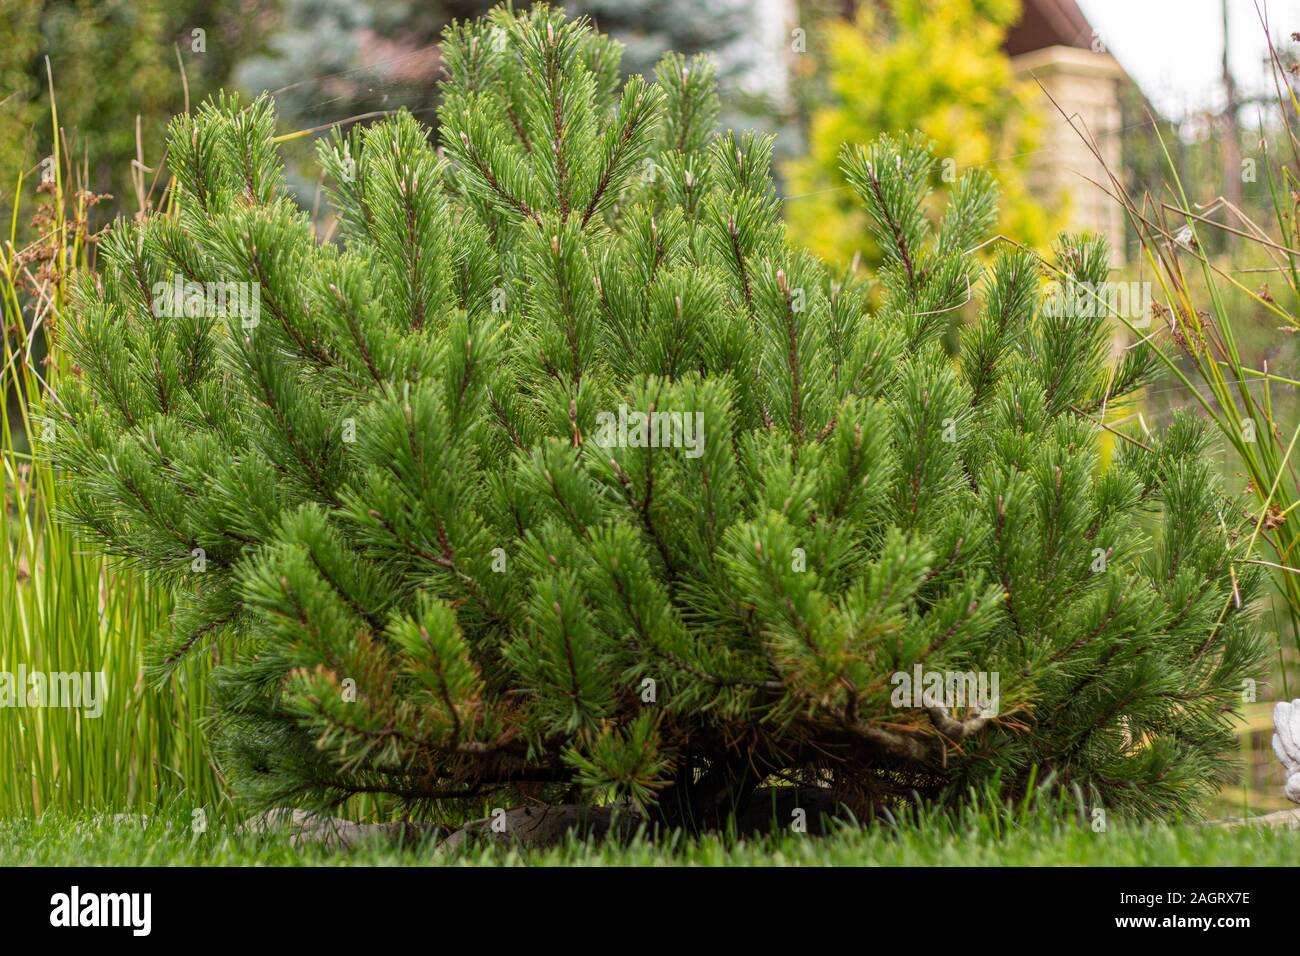 Dwarf mountain pine on the lawn, selective focus. Stock Photo